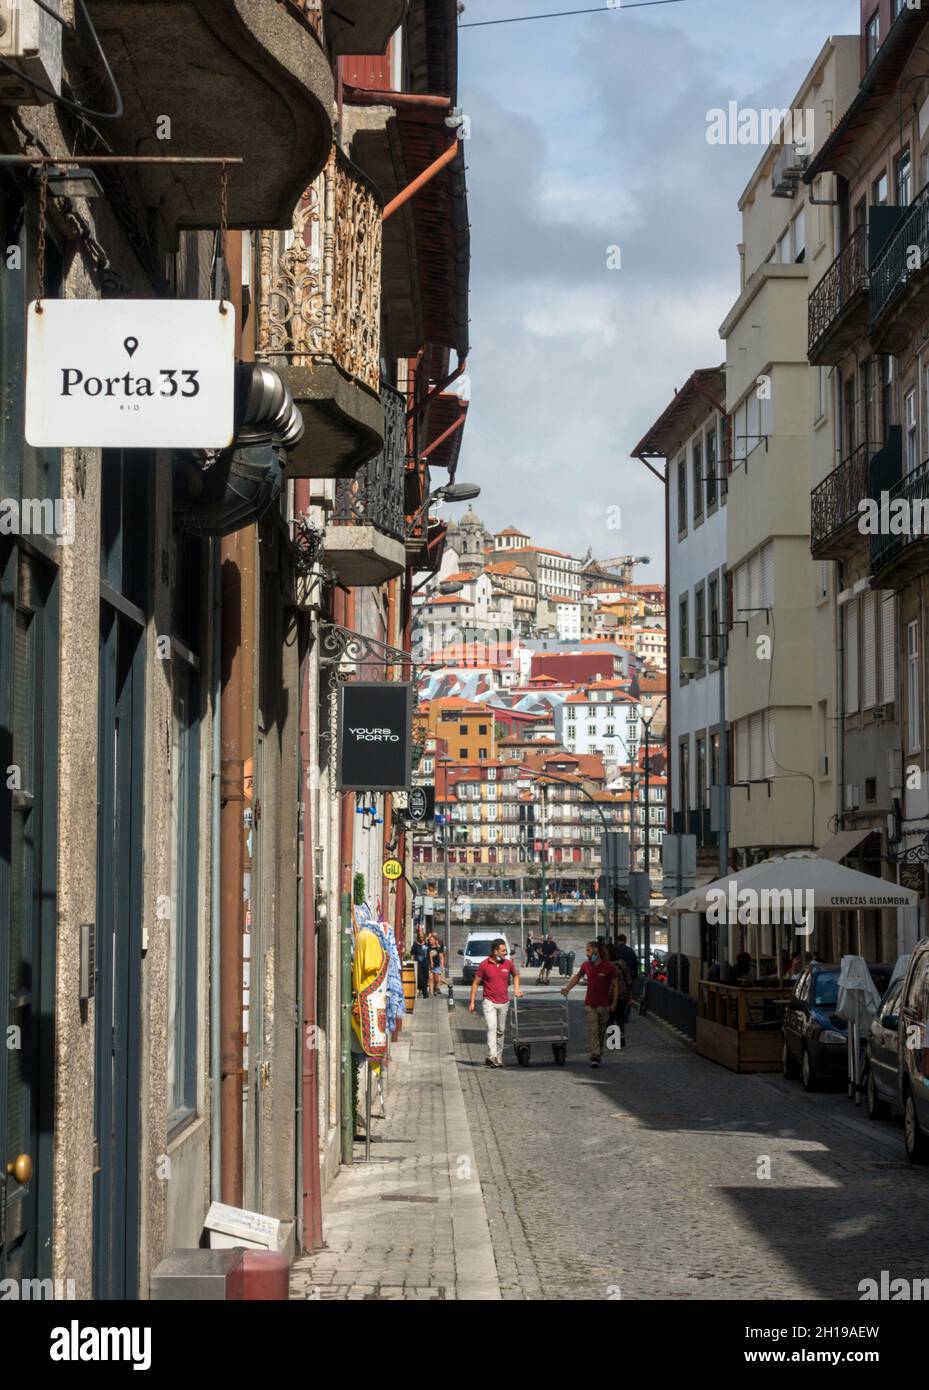 Street view Vila Nova de Gaia district with cable cars visible, of Porto. Portugal. Stock Photo